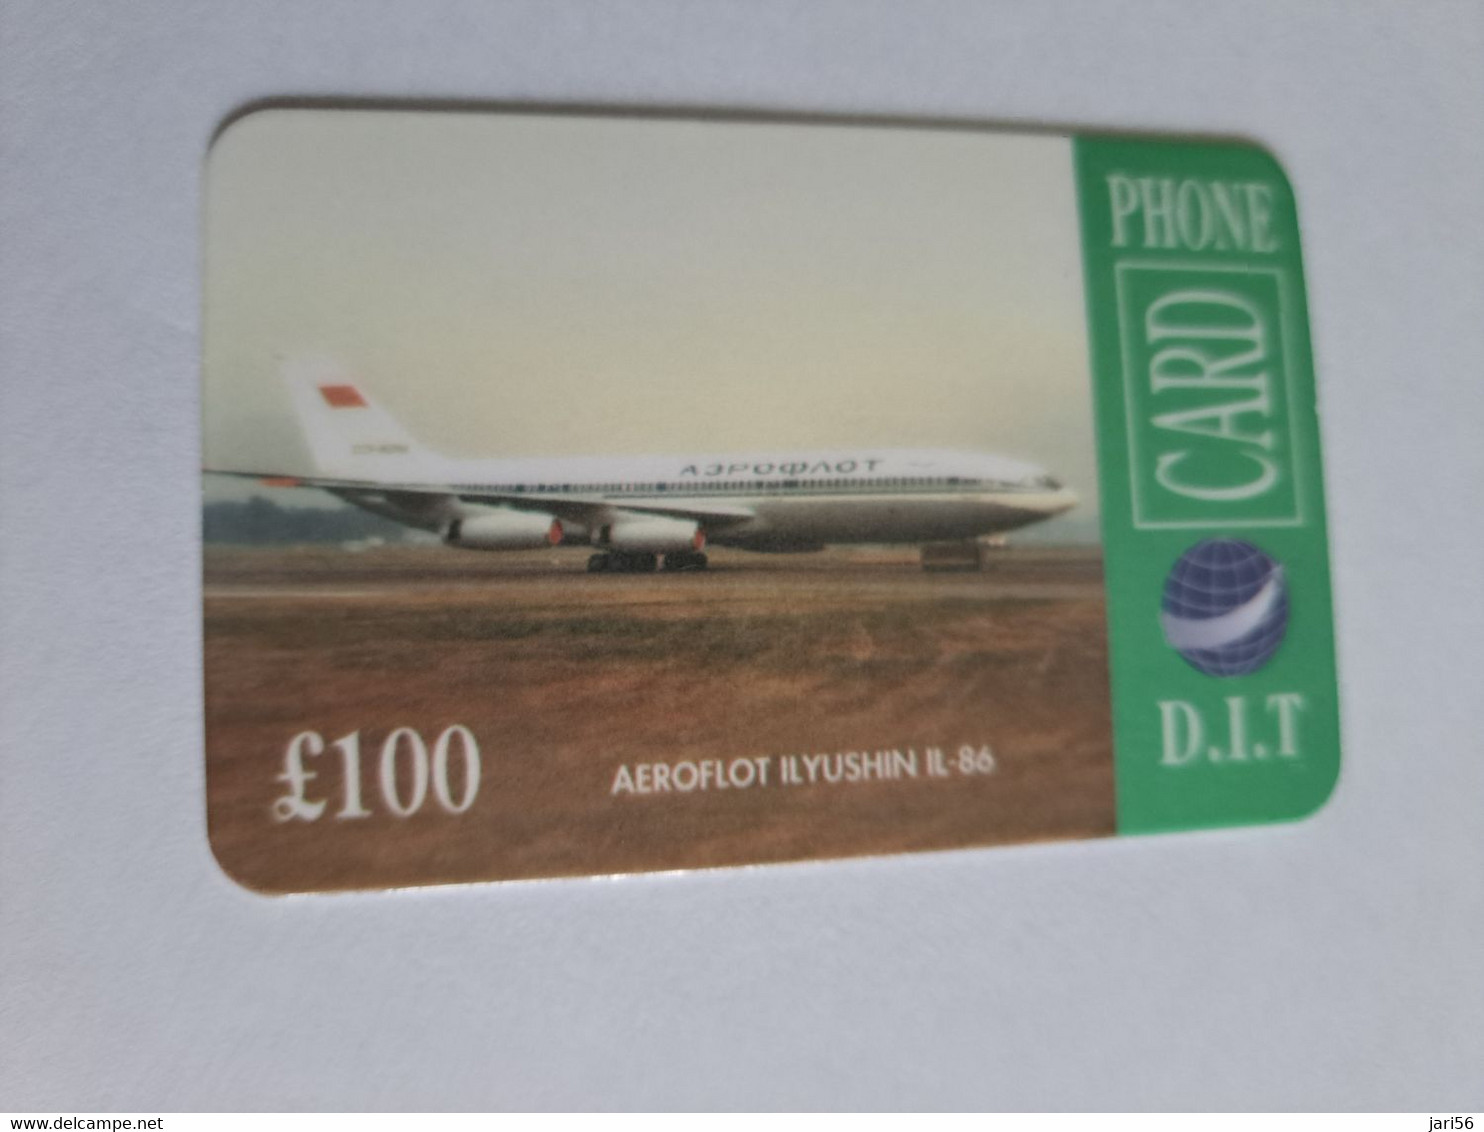 GREAT BRITAIN   100 POUND   / AEROFLOT YUSHIN FL 86    DIT PHONECARD    PREPAID CARD      **12902** - [10] Colecciones